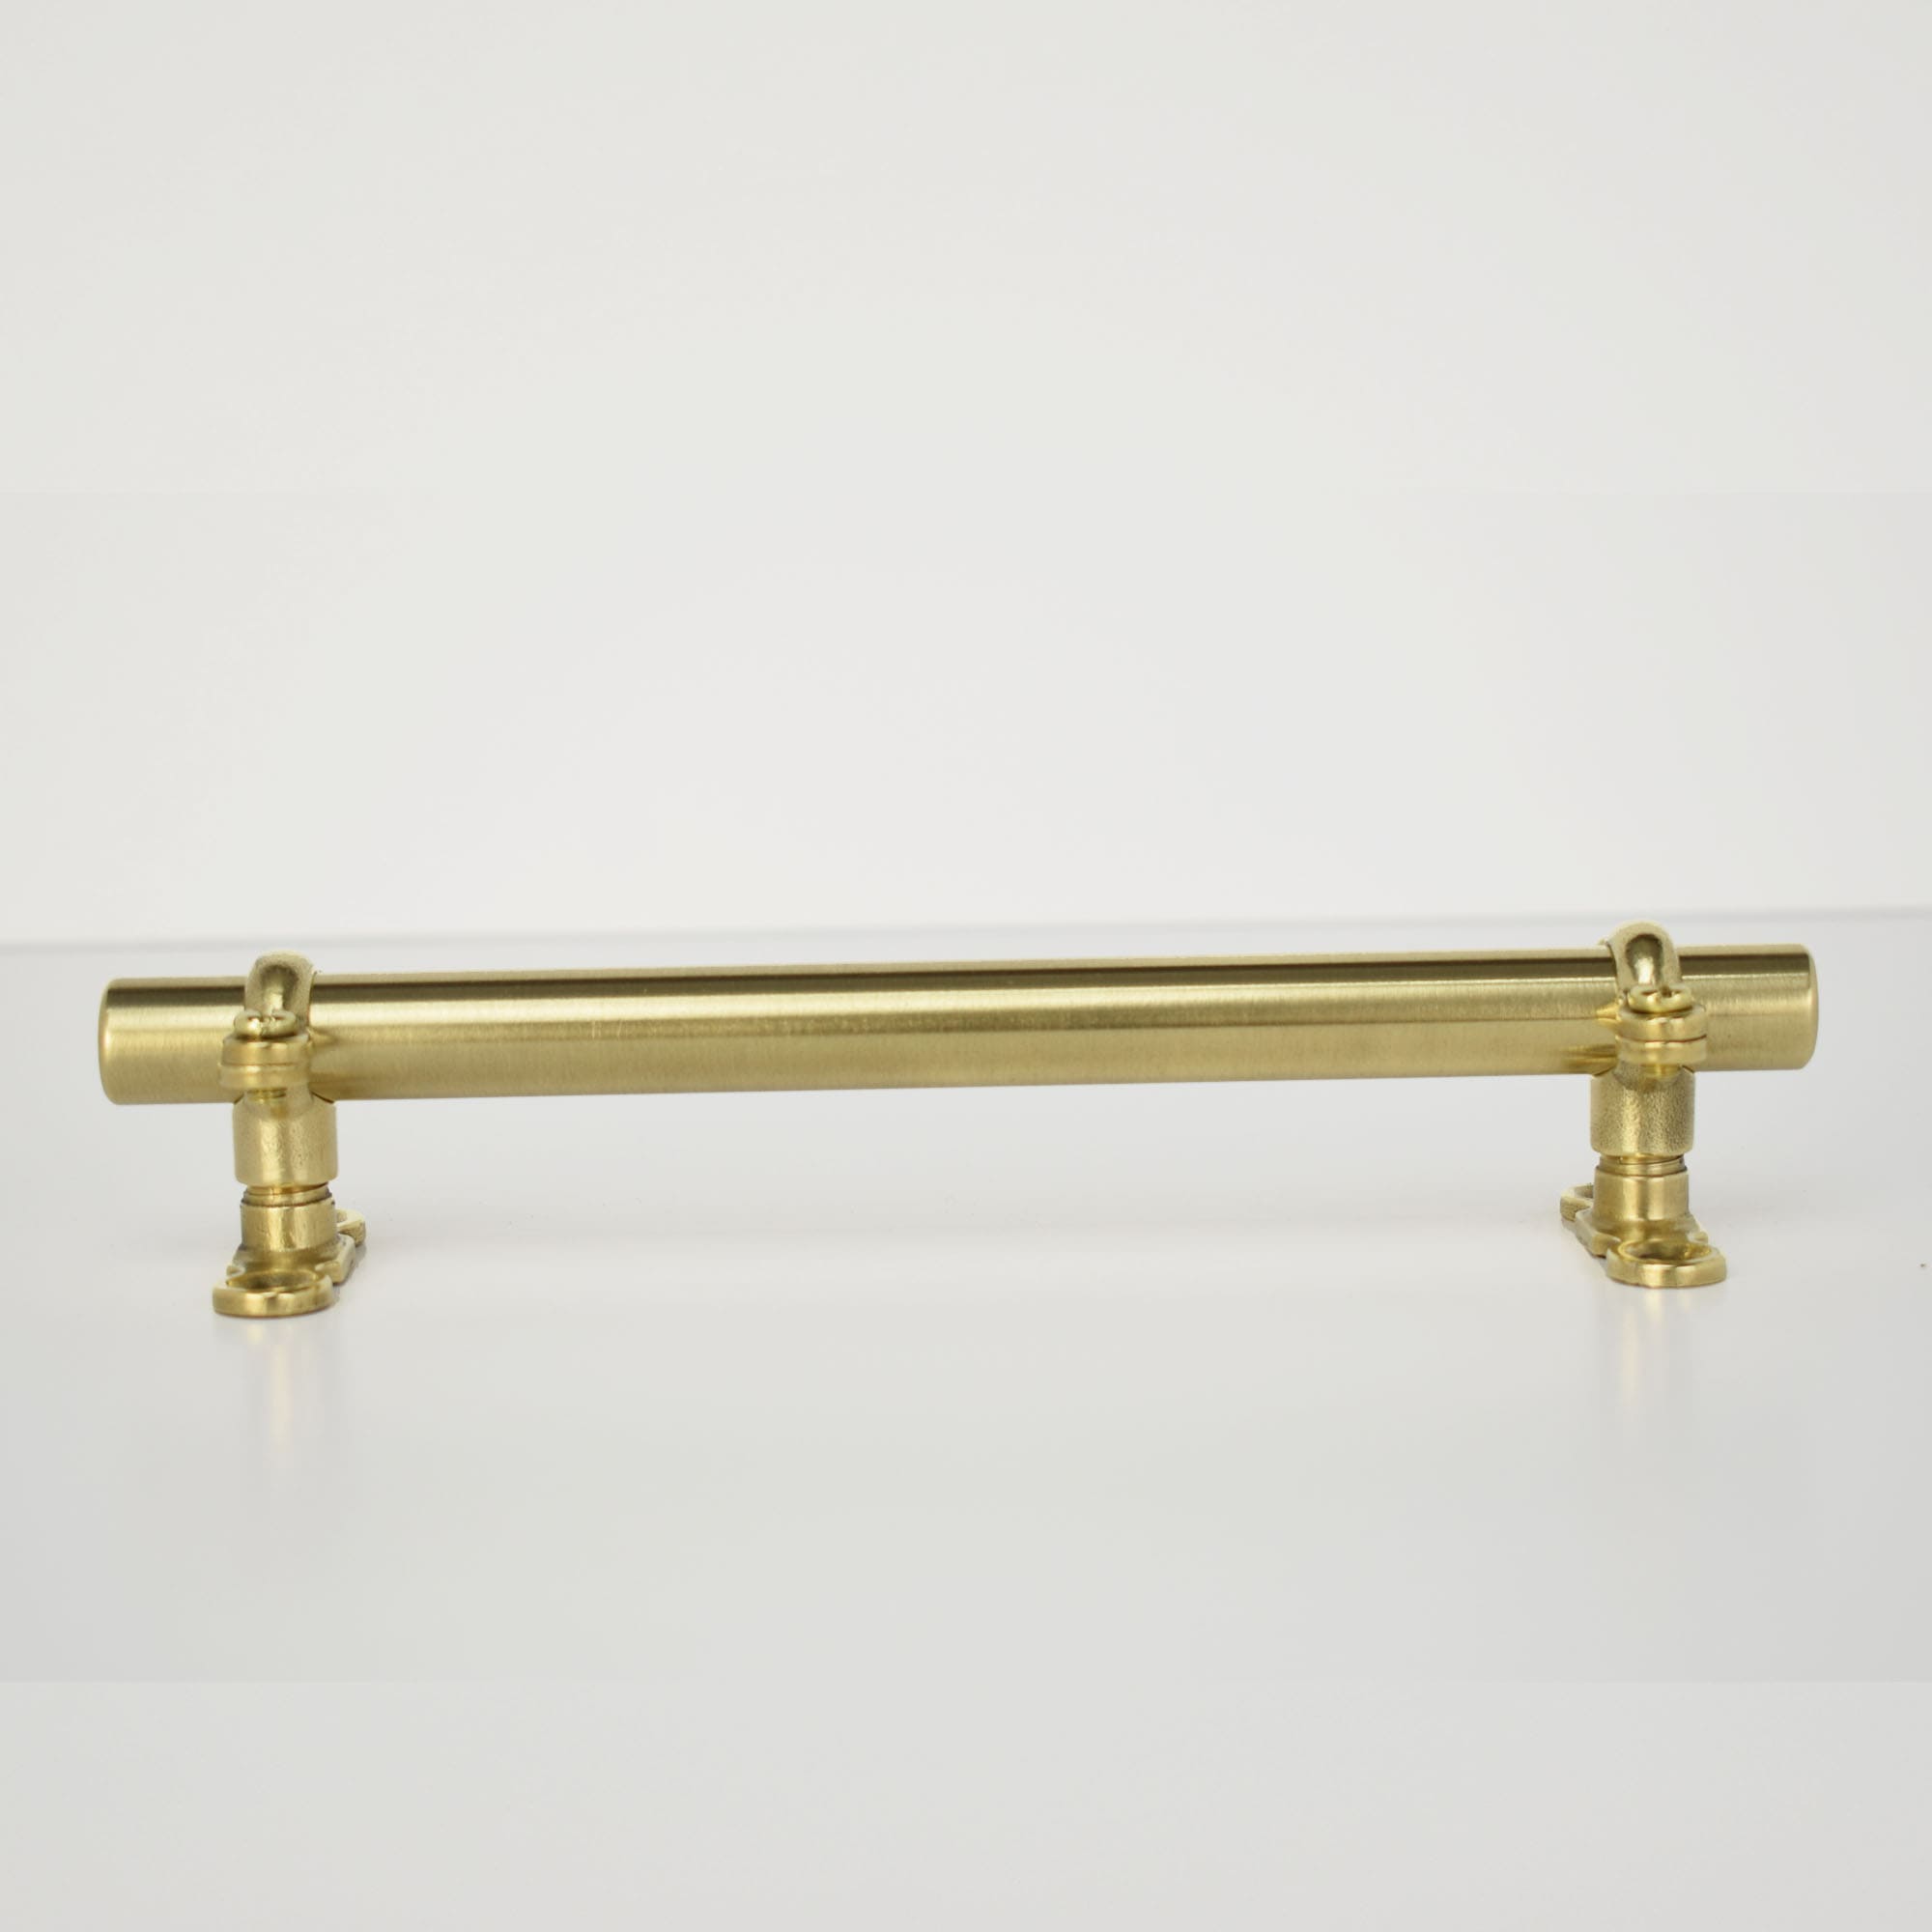 Solid Brass Bracket Pull - Proper Copper Design